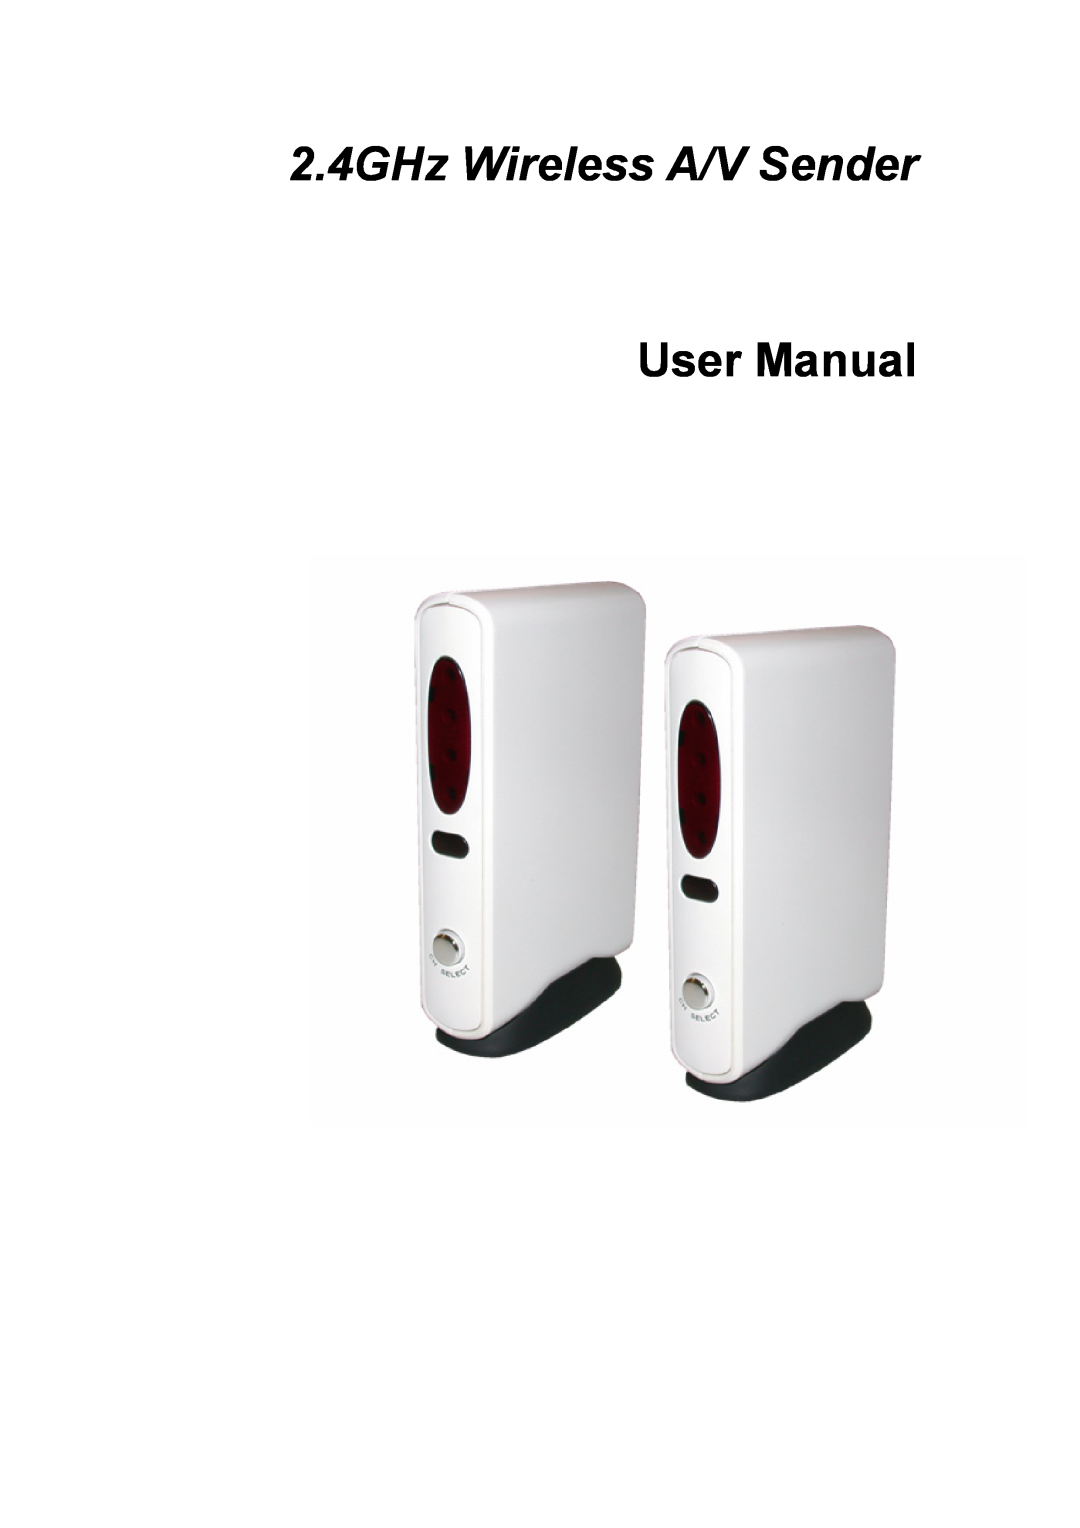 Quatech user manual 2.4GHz Wireless A/V Sender 